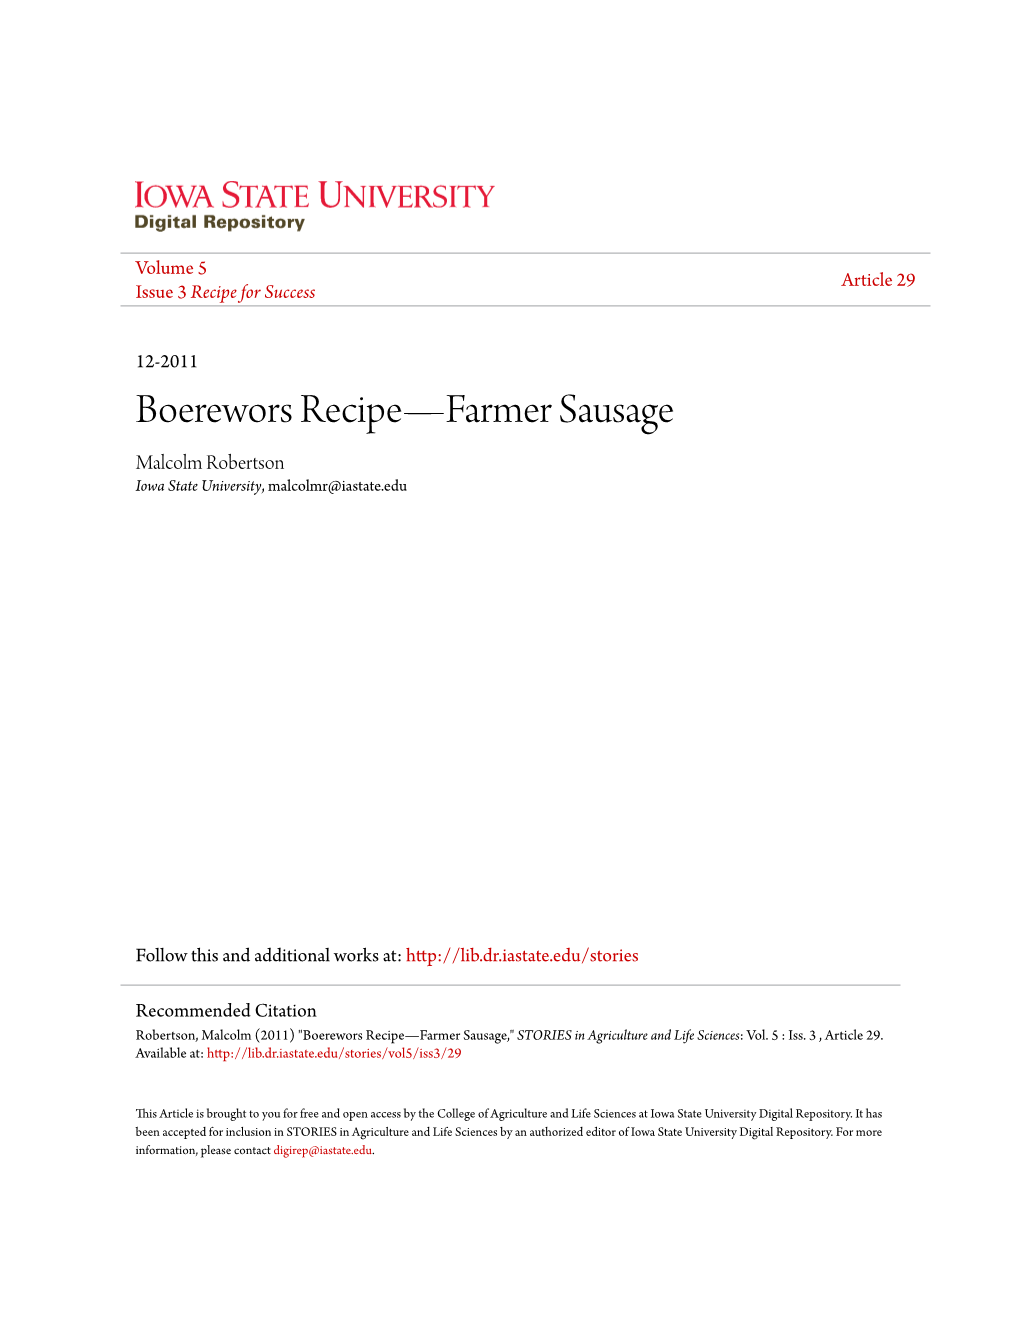 Boerewors Recipeâ•Flfarmer Sausage